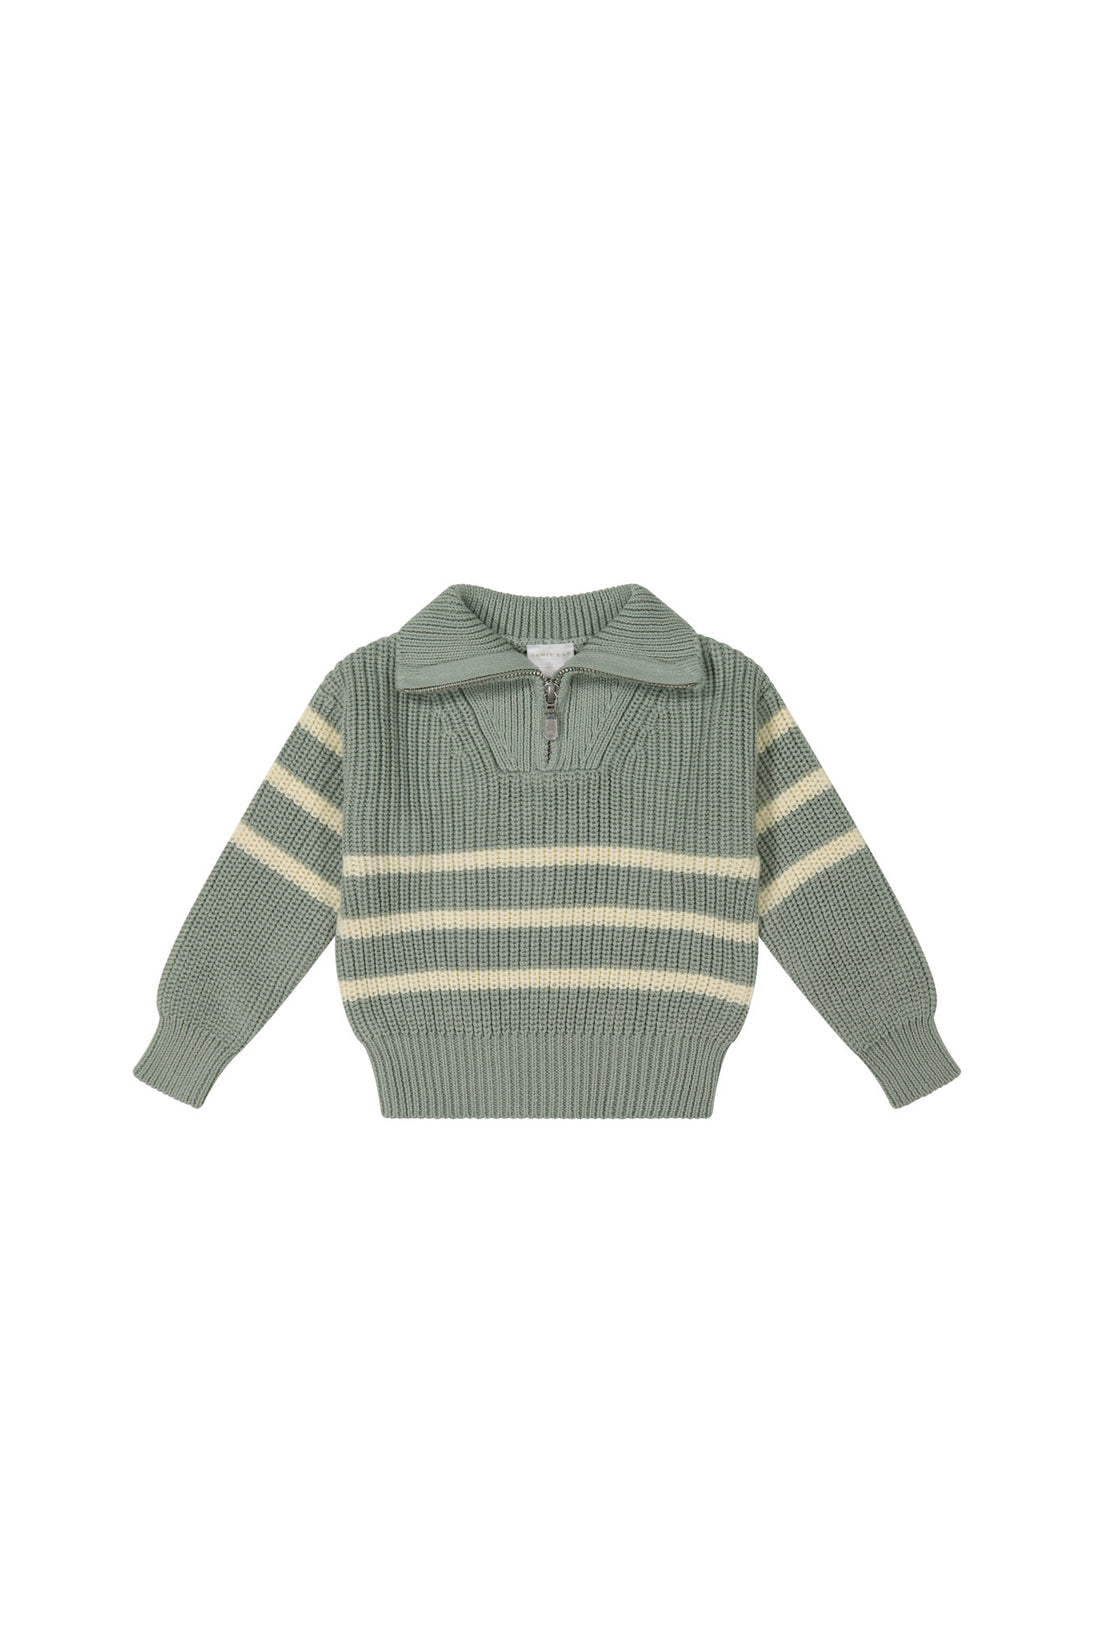 Jack Zip Jumper - Lenny Stripe Pond Childrens Knitwear from Jamie Kay NZ